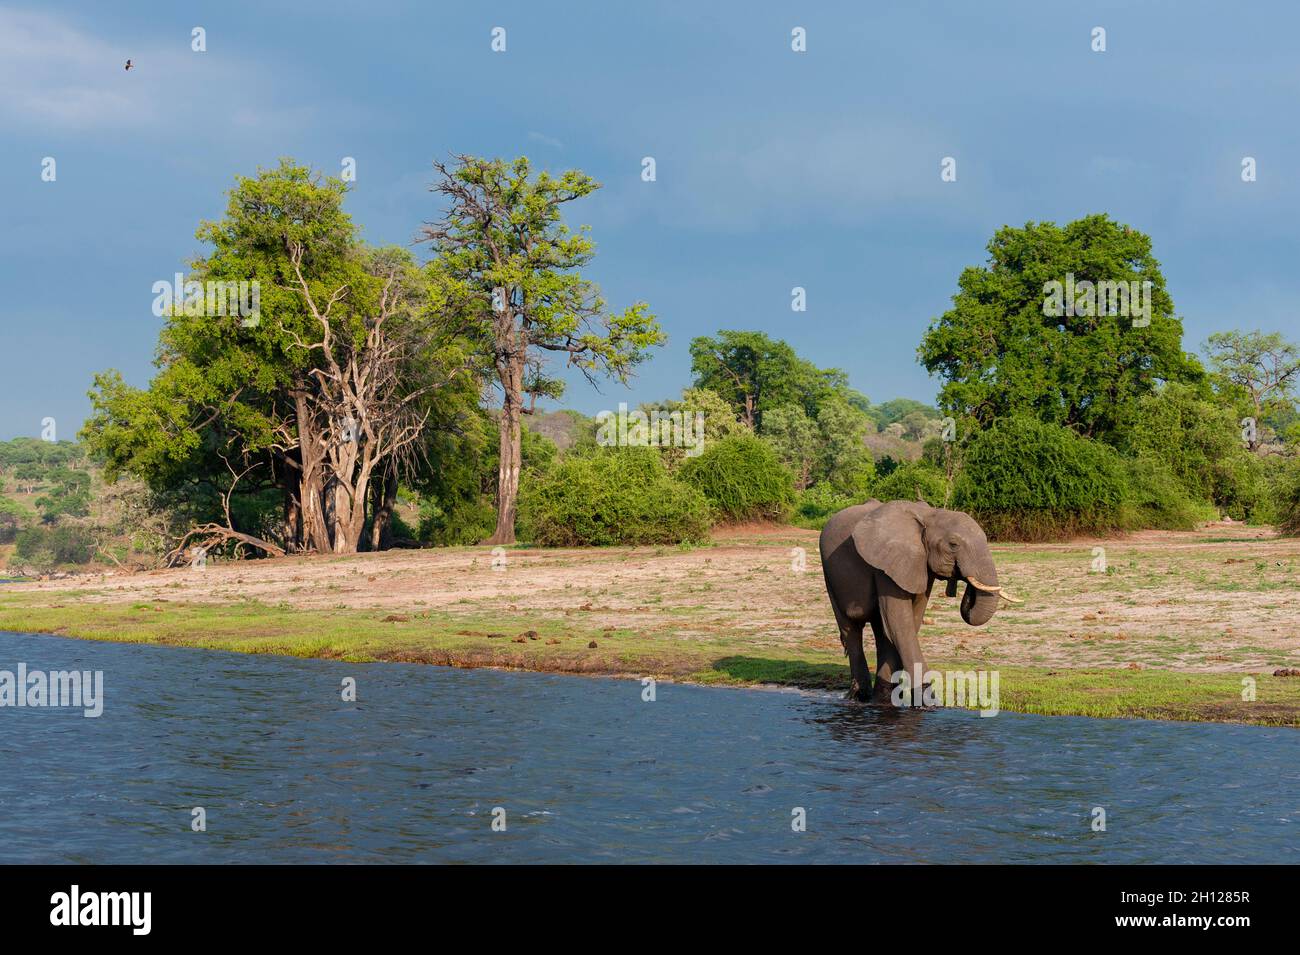 An African elephant, Loxodonta africana, drinking from a bank of the Chobe River. Chobe River, Chobe National Park, Botswana. Stock Photo